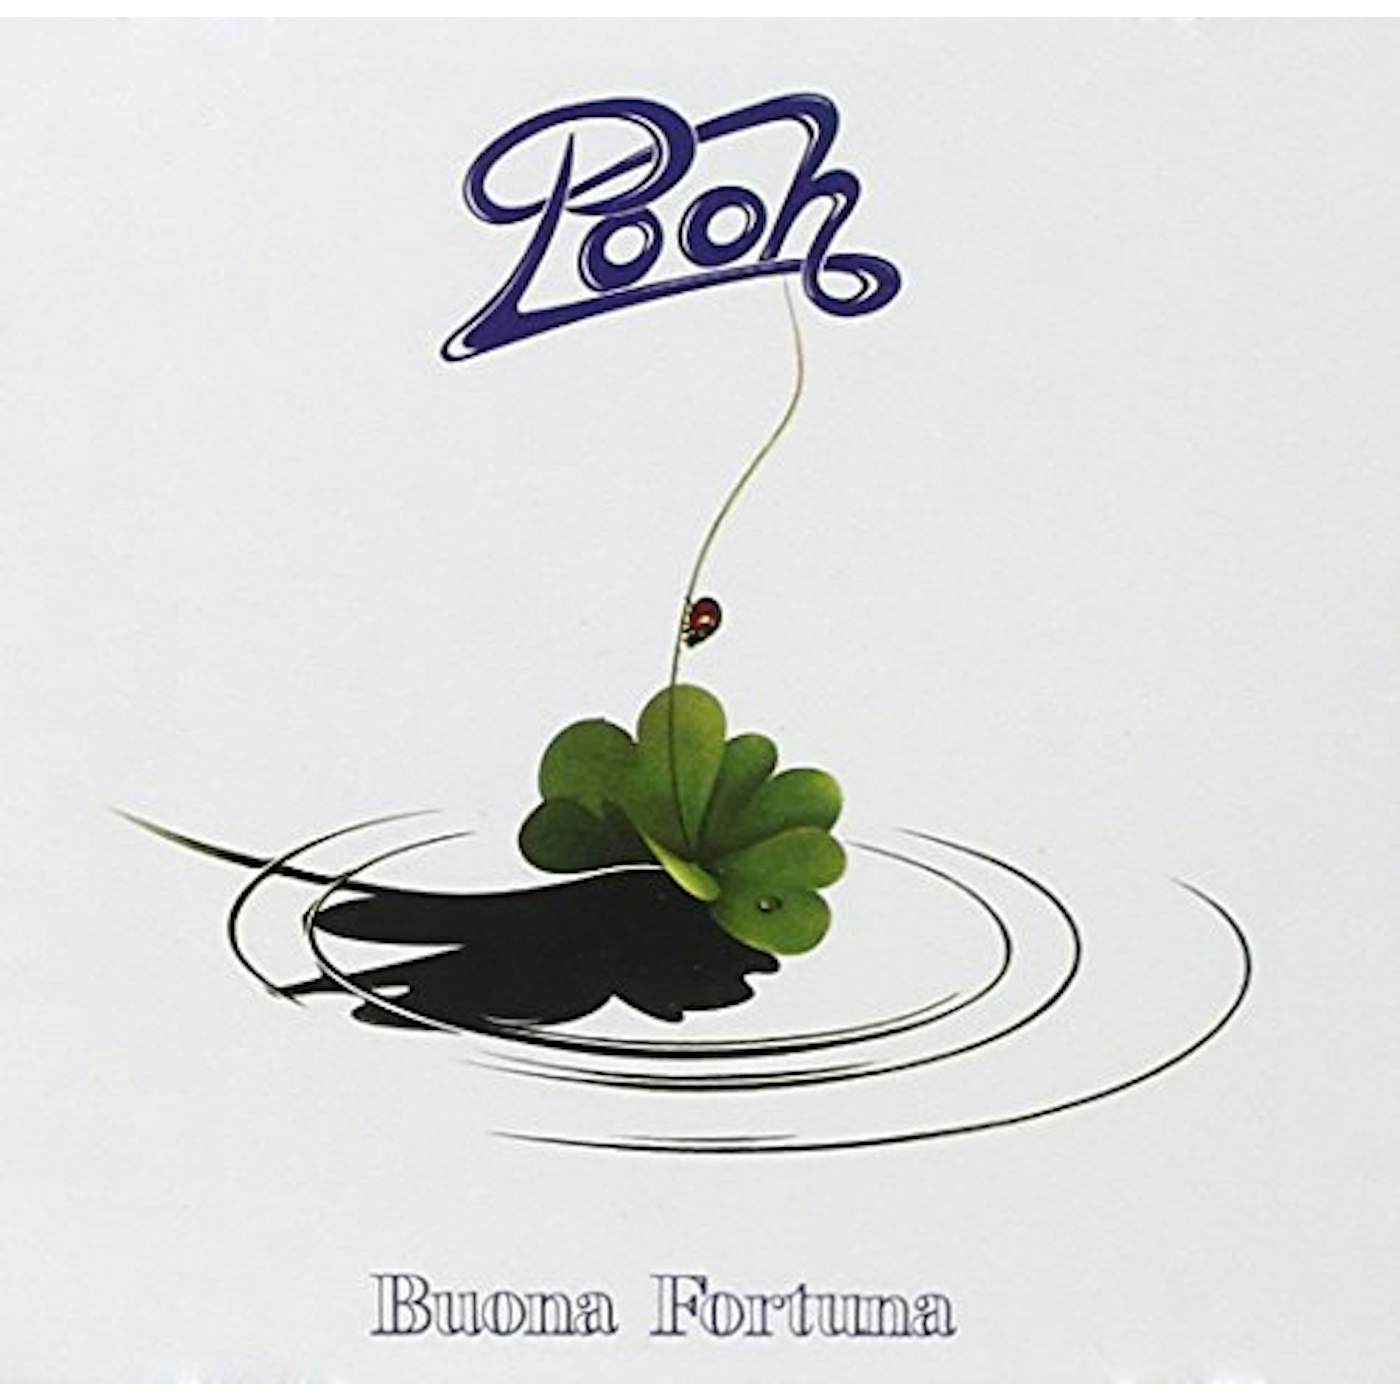 Pooh BUONA FORTUNA (REMASTERED) CD